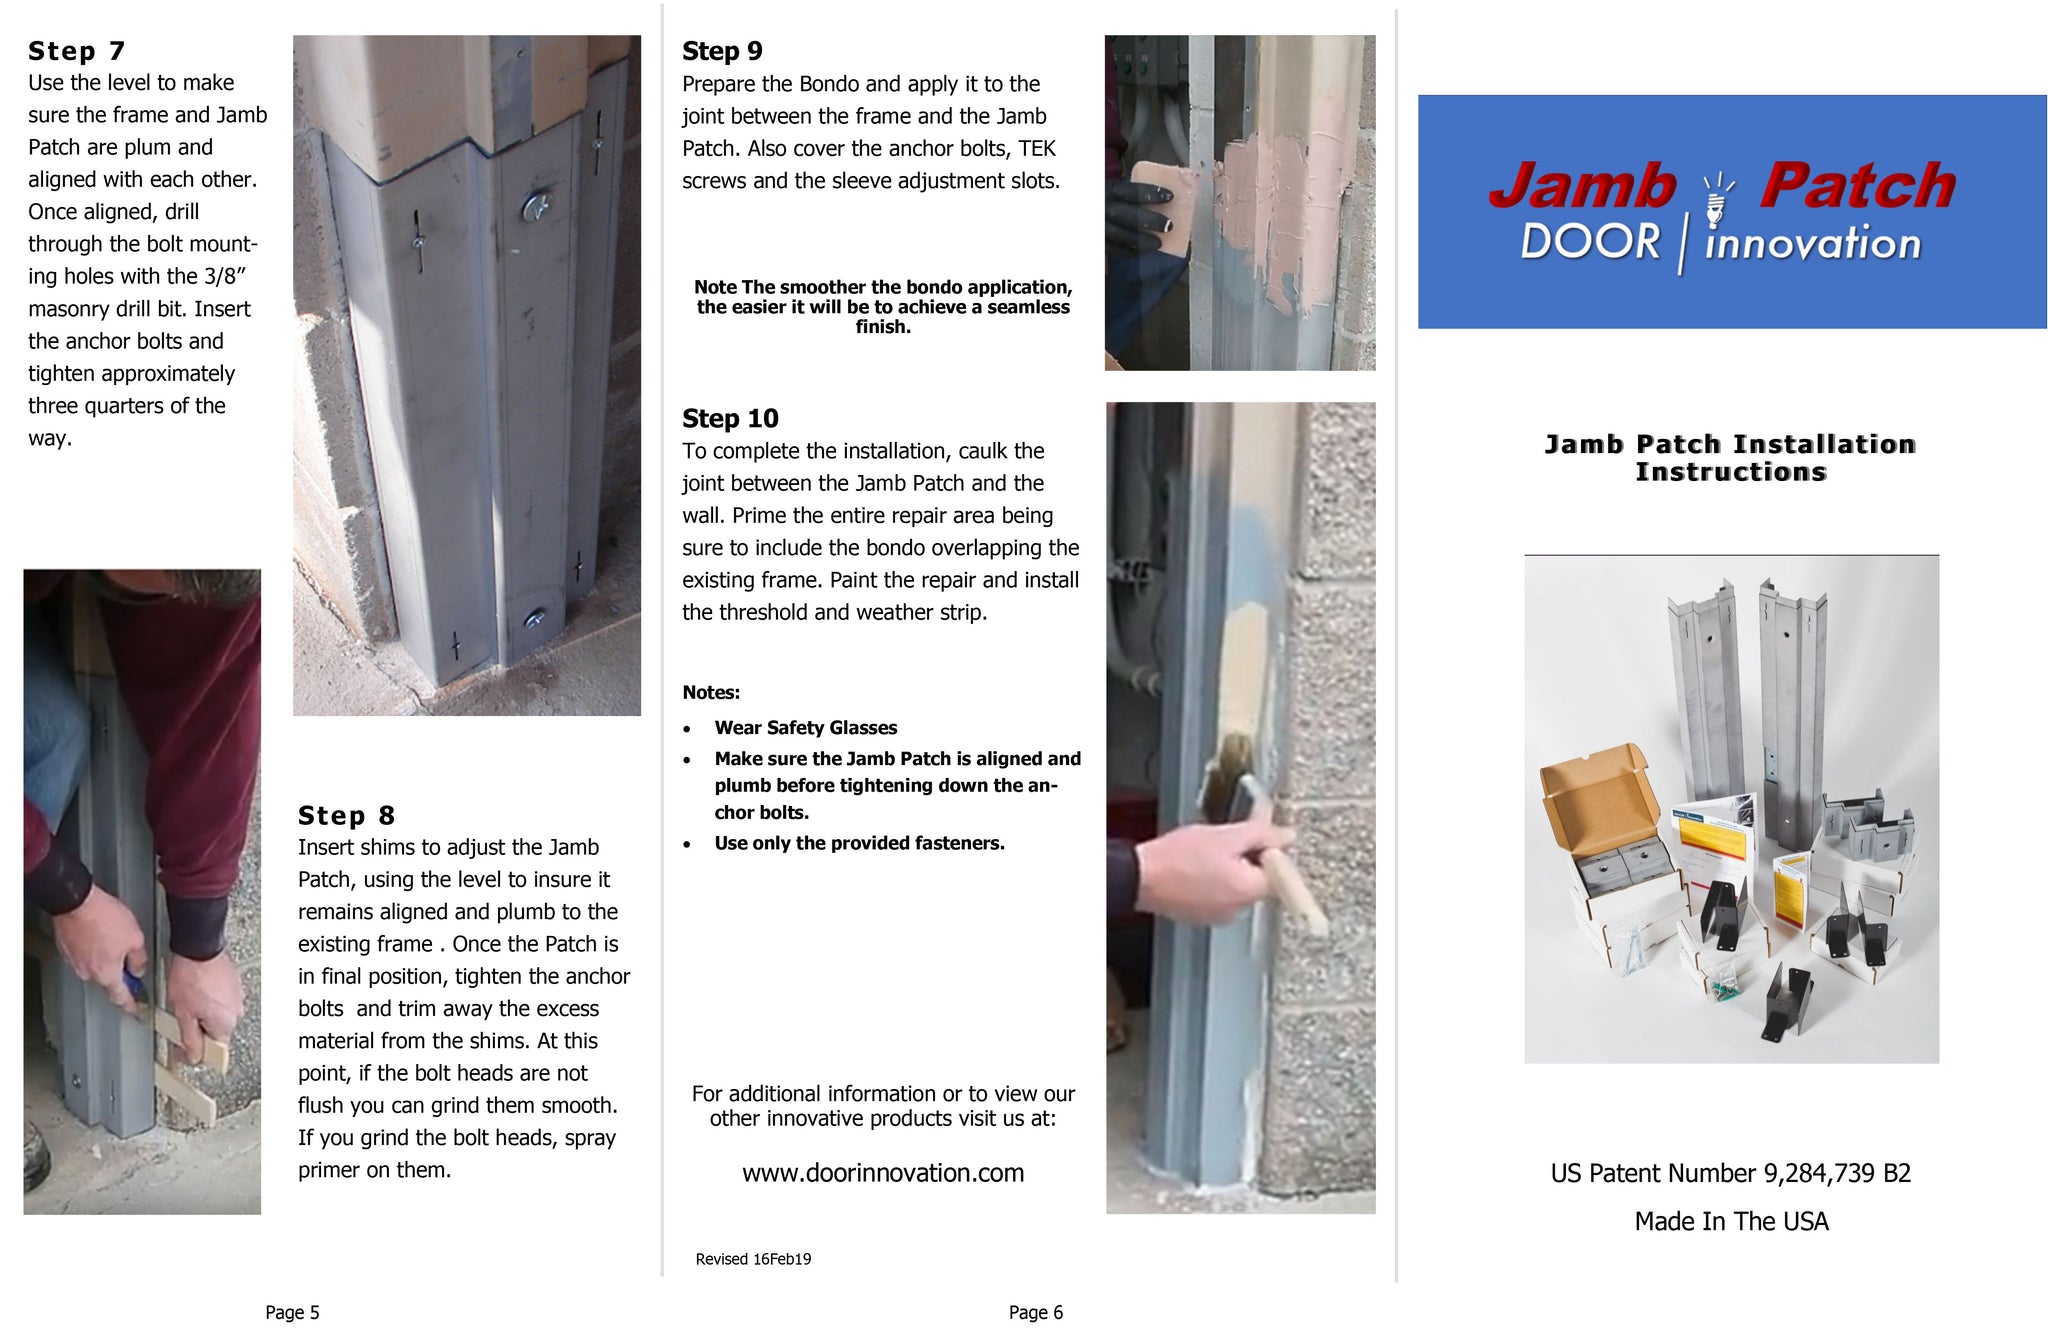 Jamb Patch Kit (4") Door Innovation